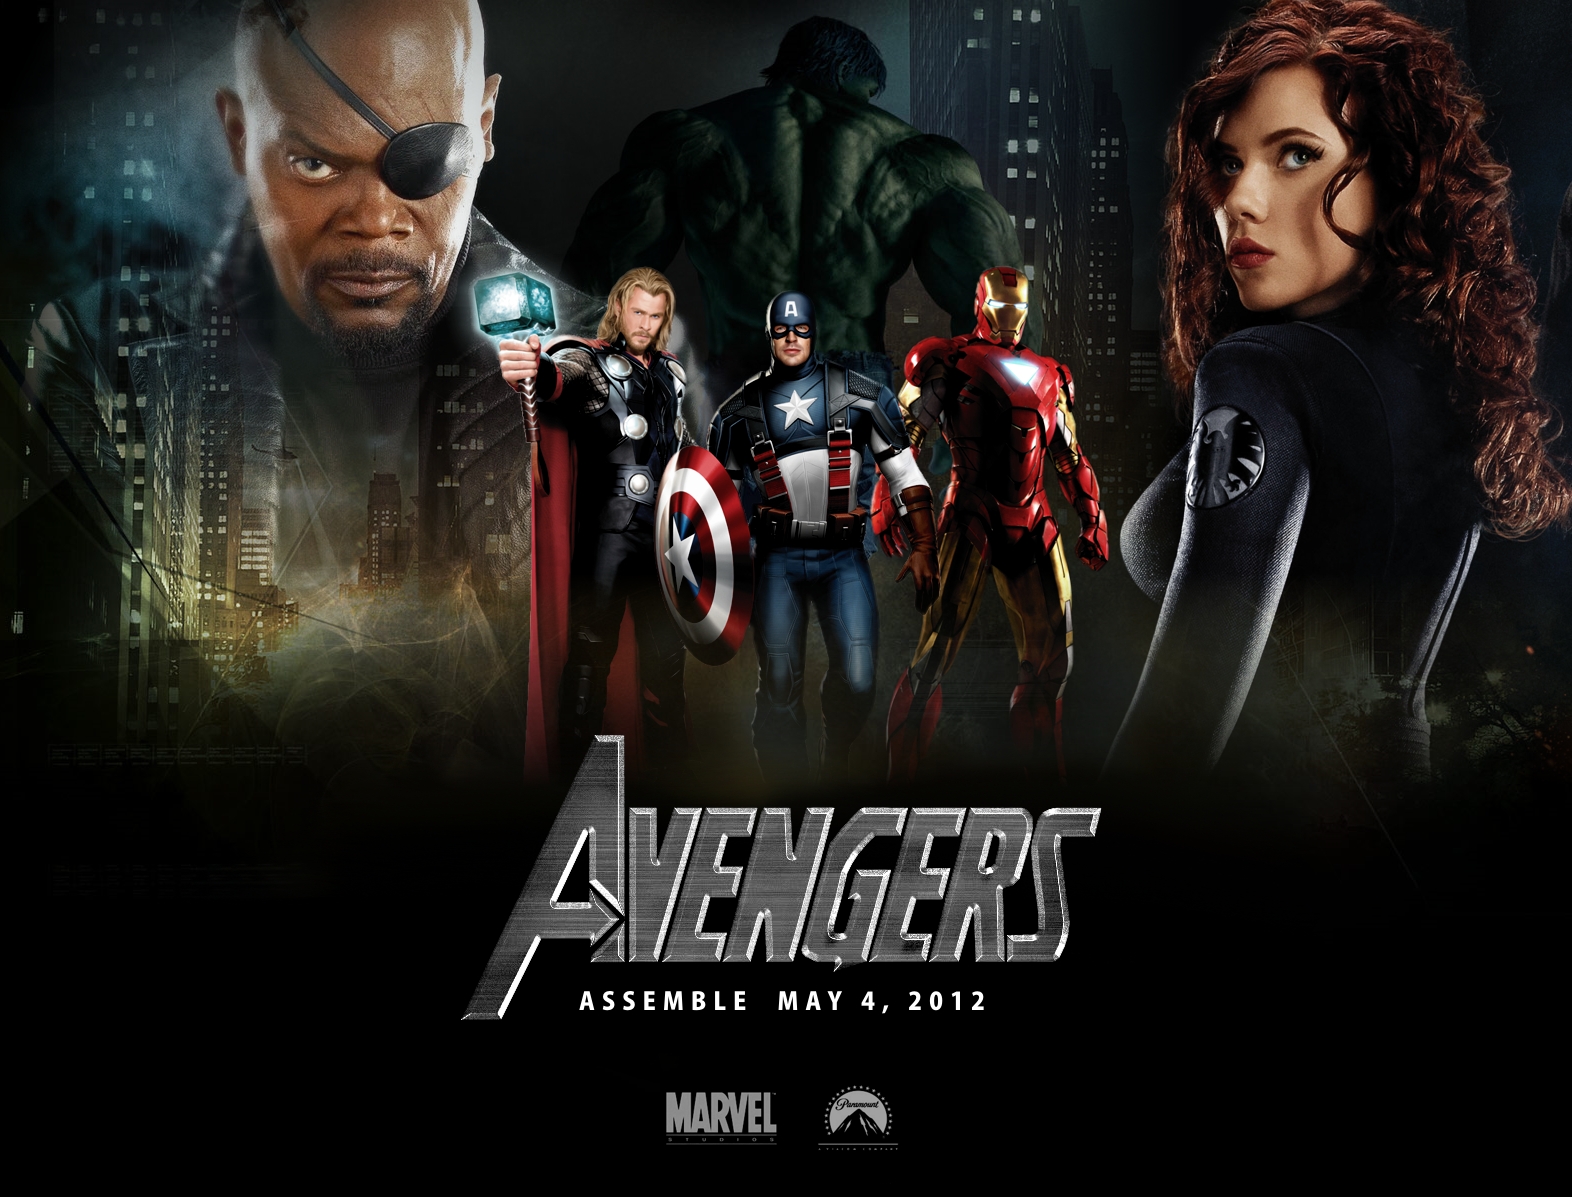 http://3.bp.blogspot.com/-sQnzbOl457M/TvADf2v5QeI/AAAAAAAADrY/upYVhSQ-Lyg/s1600/The-Avengers-Movie-Wallpaper-01.jpg